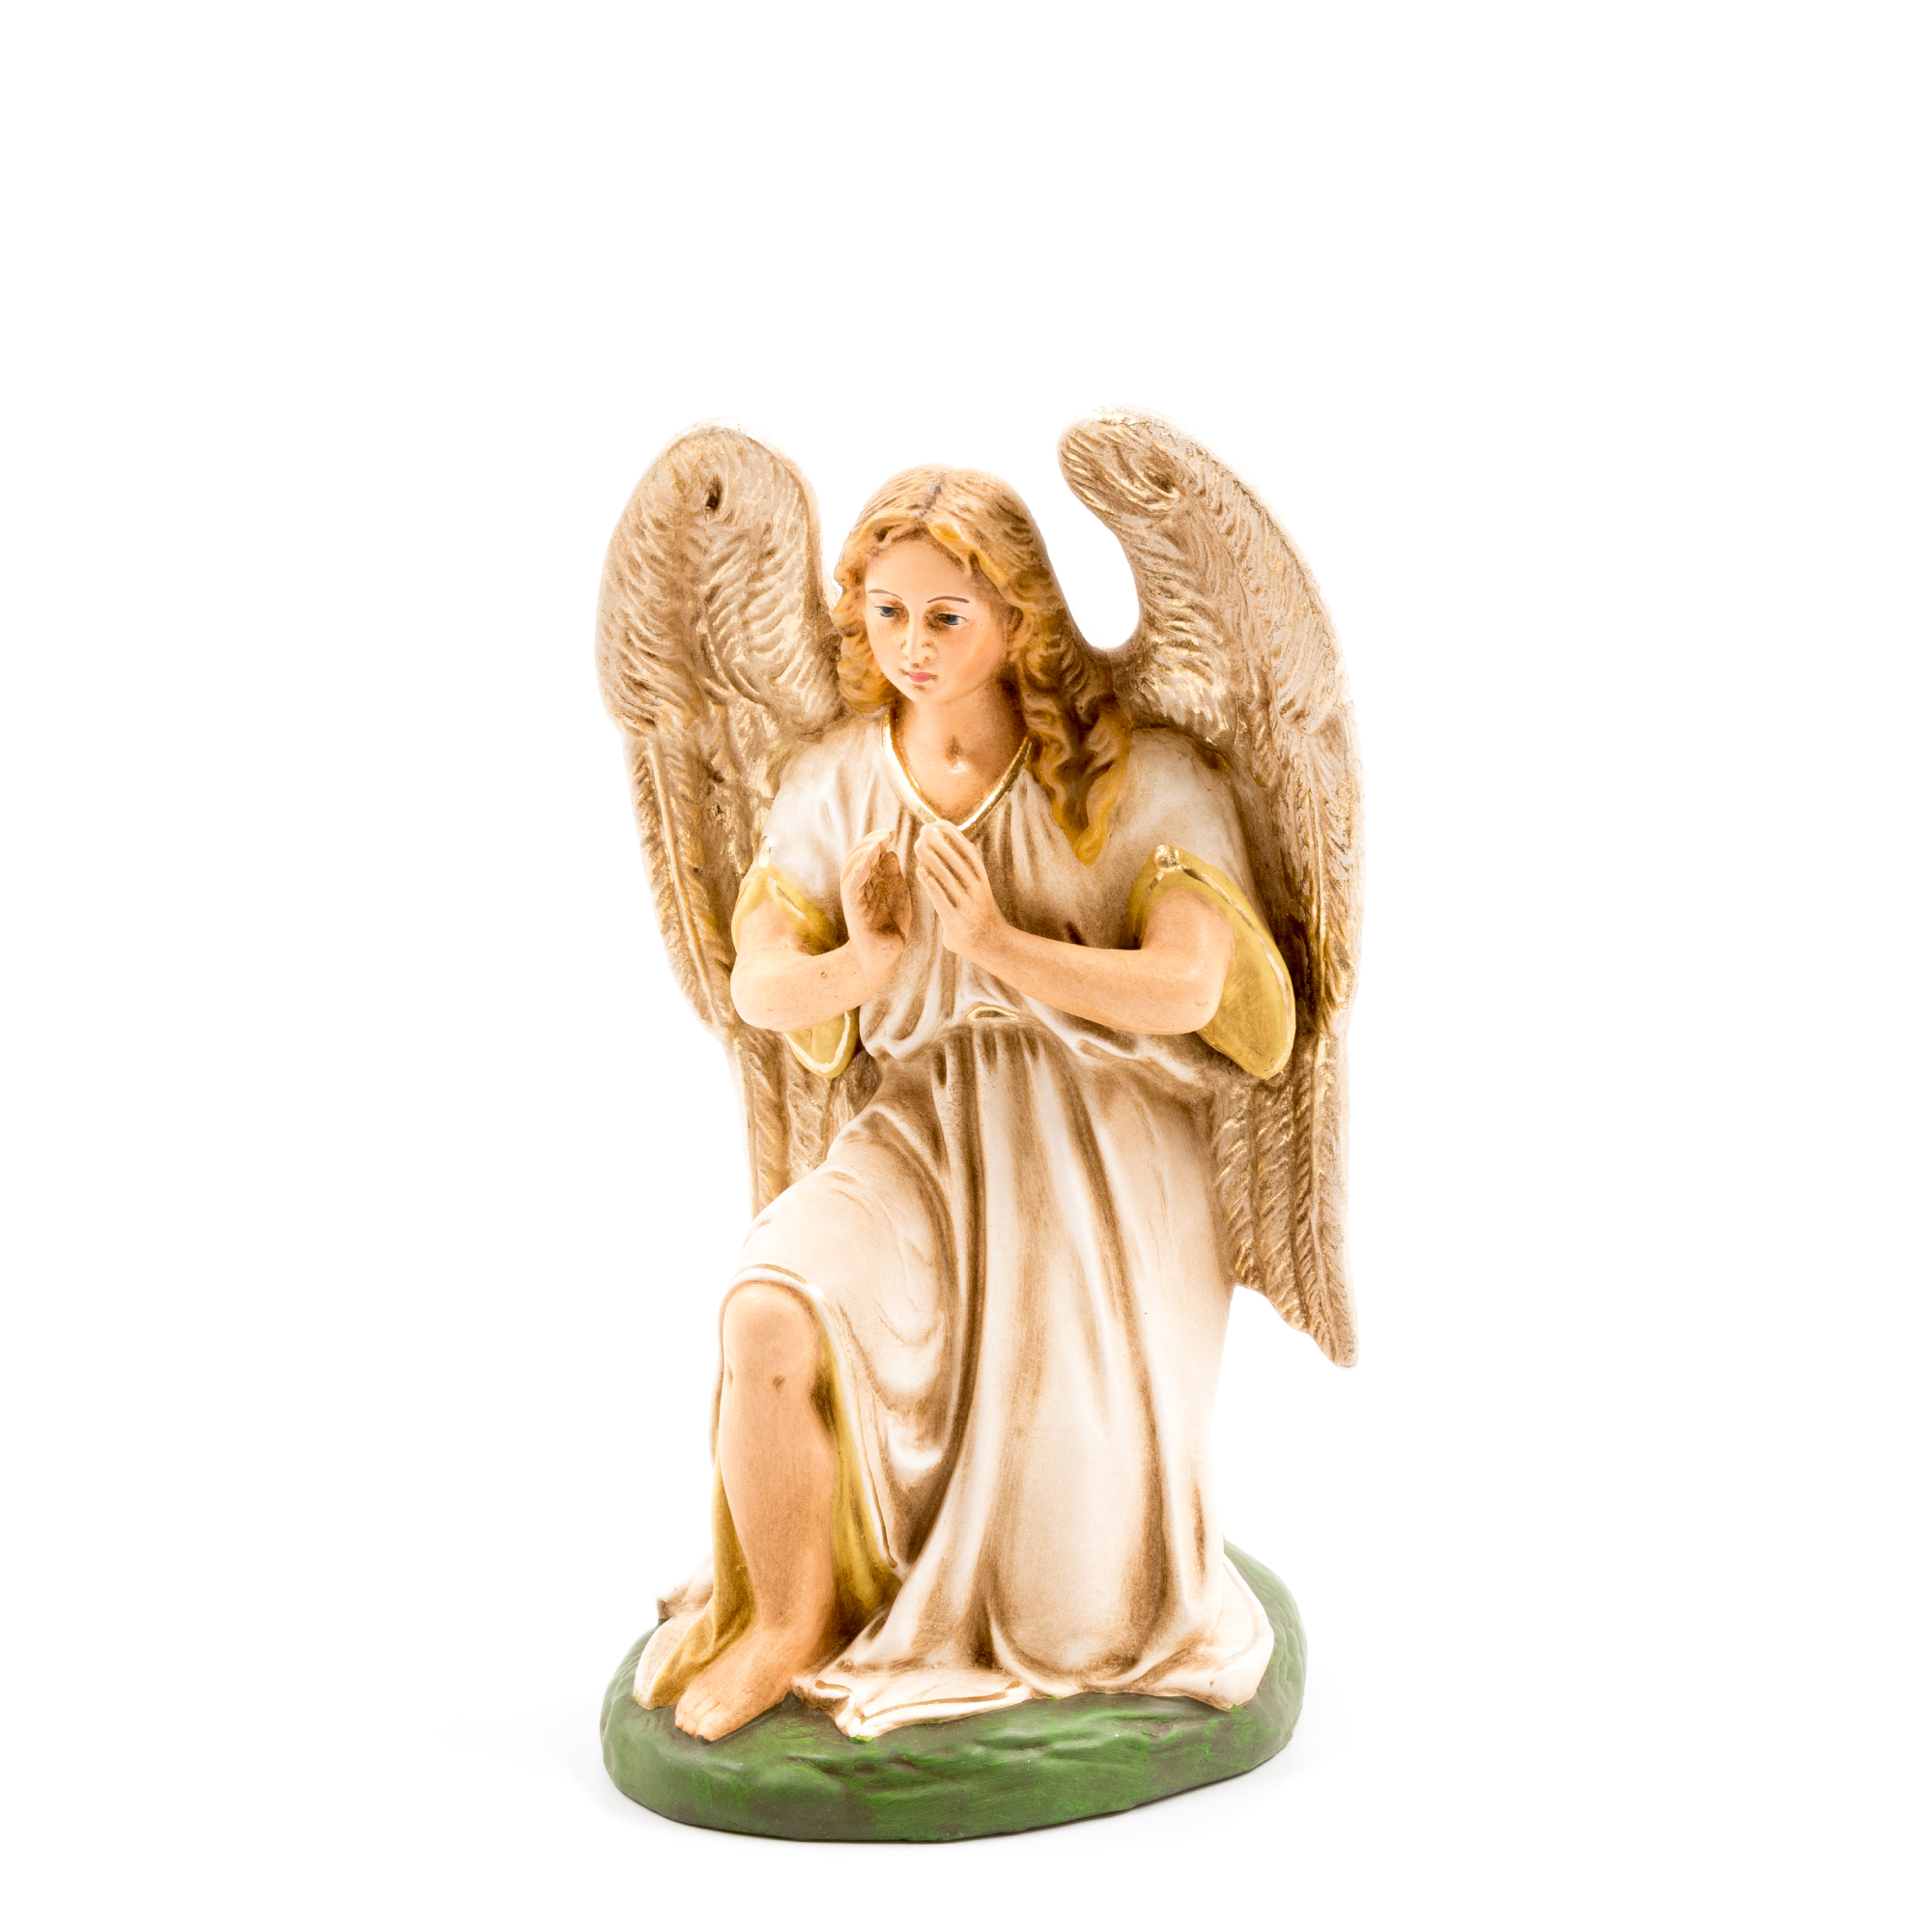 Kneeling angel, antique white, to 8.5 in. figures